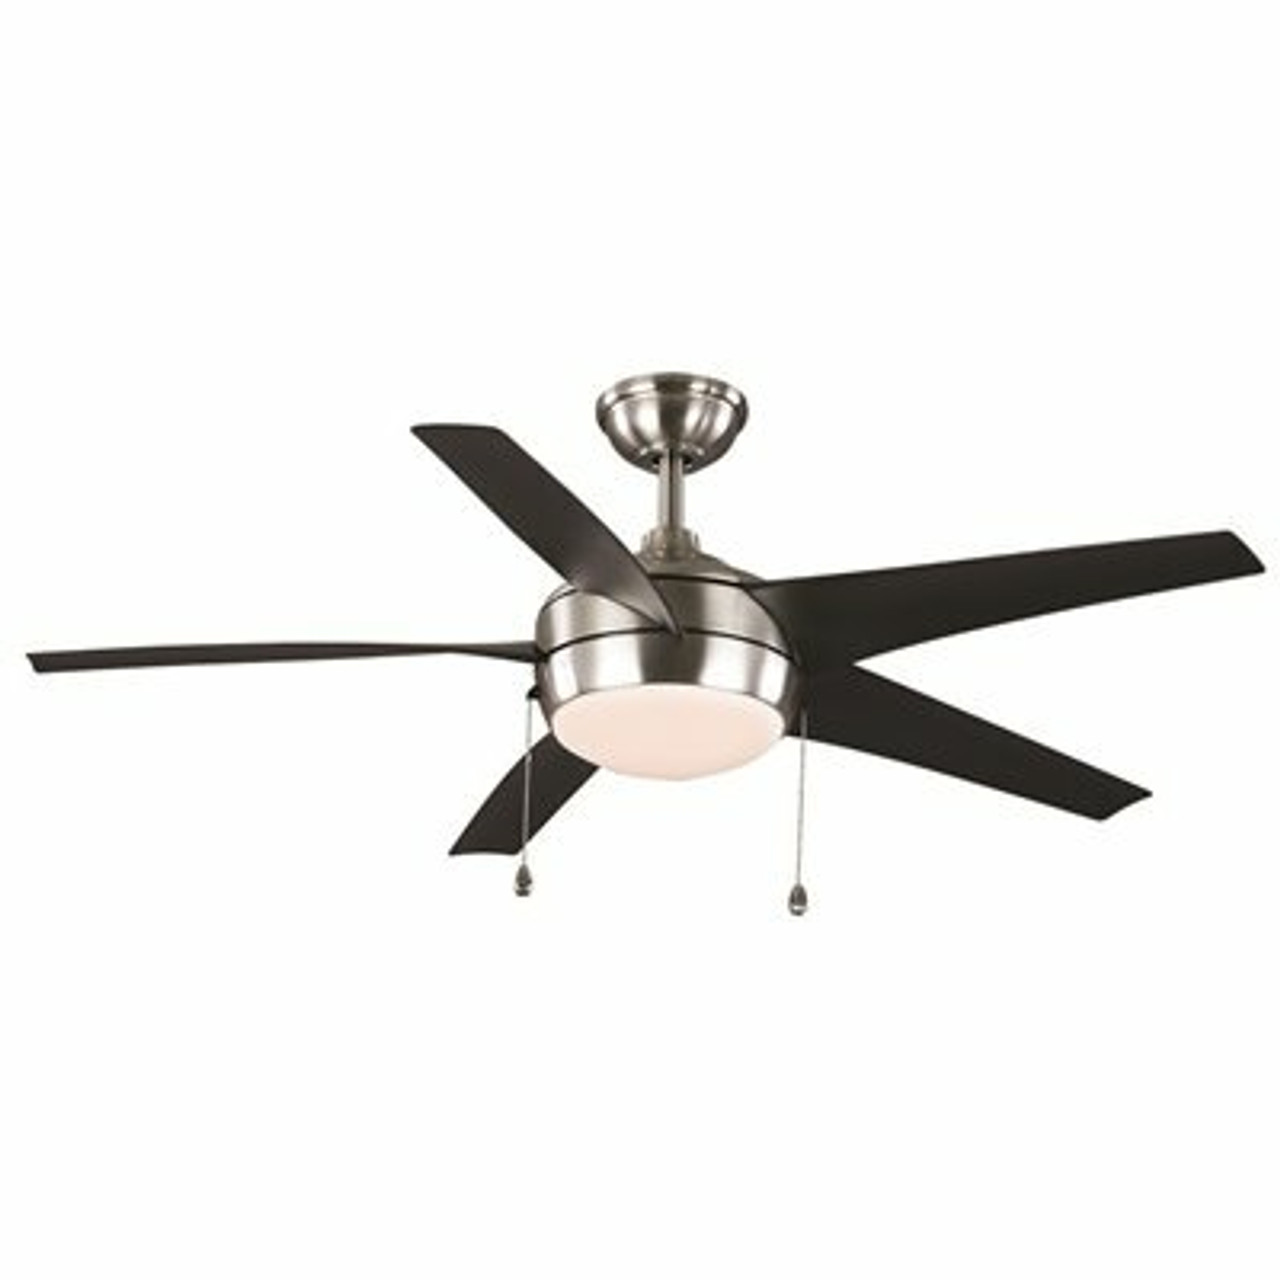 Windward 52 In. Indoor Brushed Nickel Ceiling Fan With Light